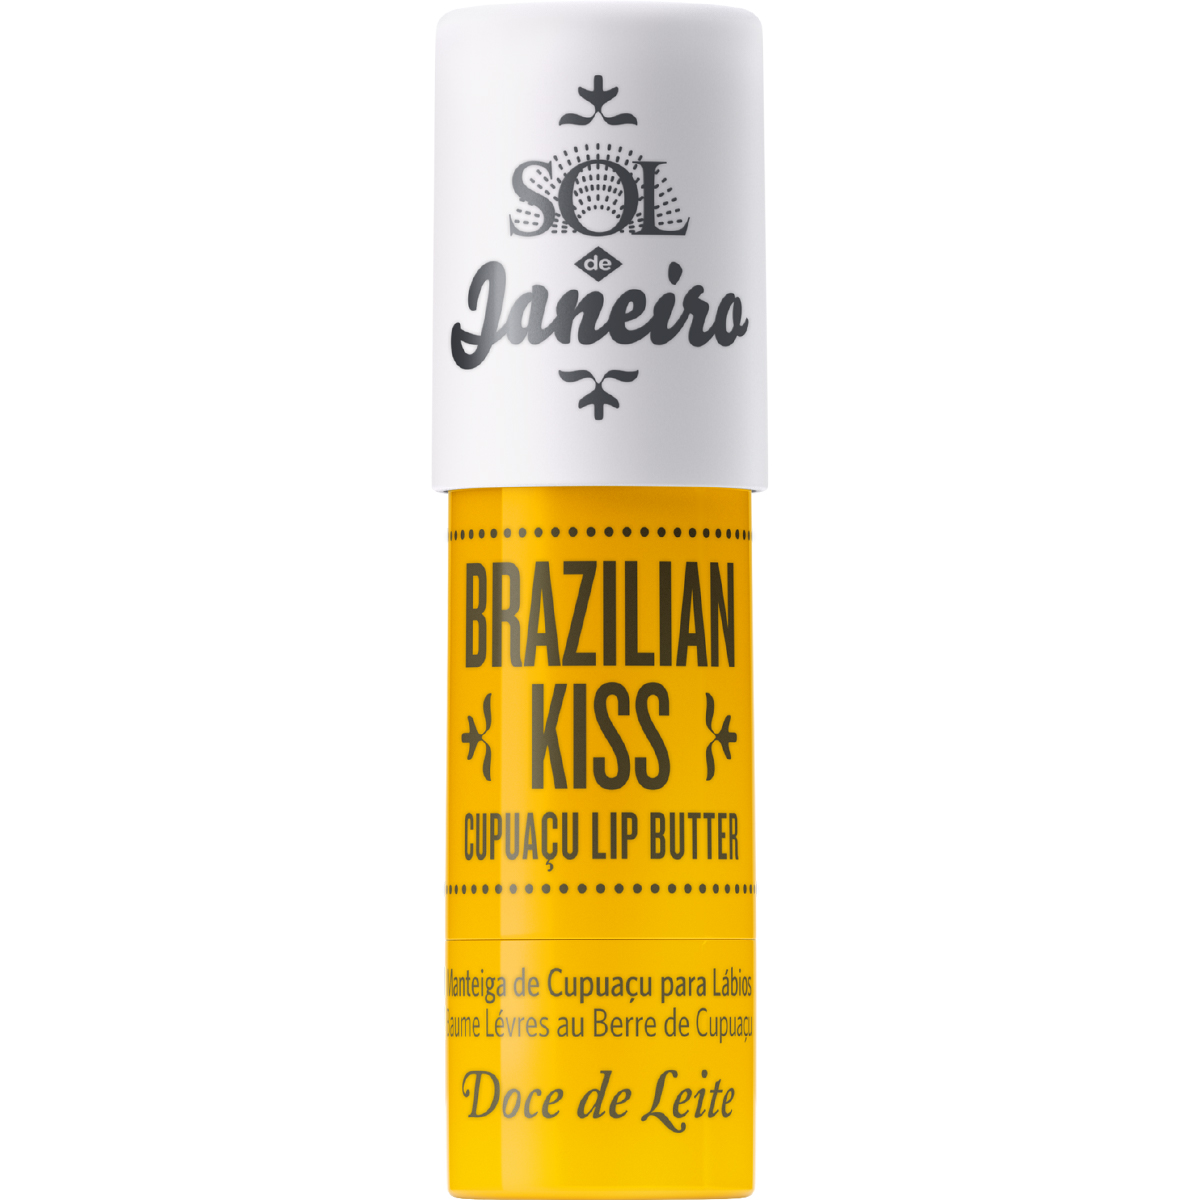 BRAZILIAN KISS CUPUAÇU LIP BUTTER